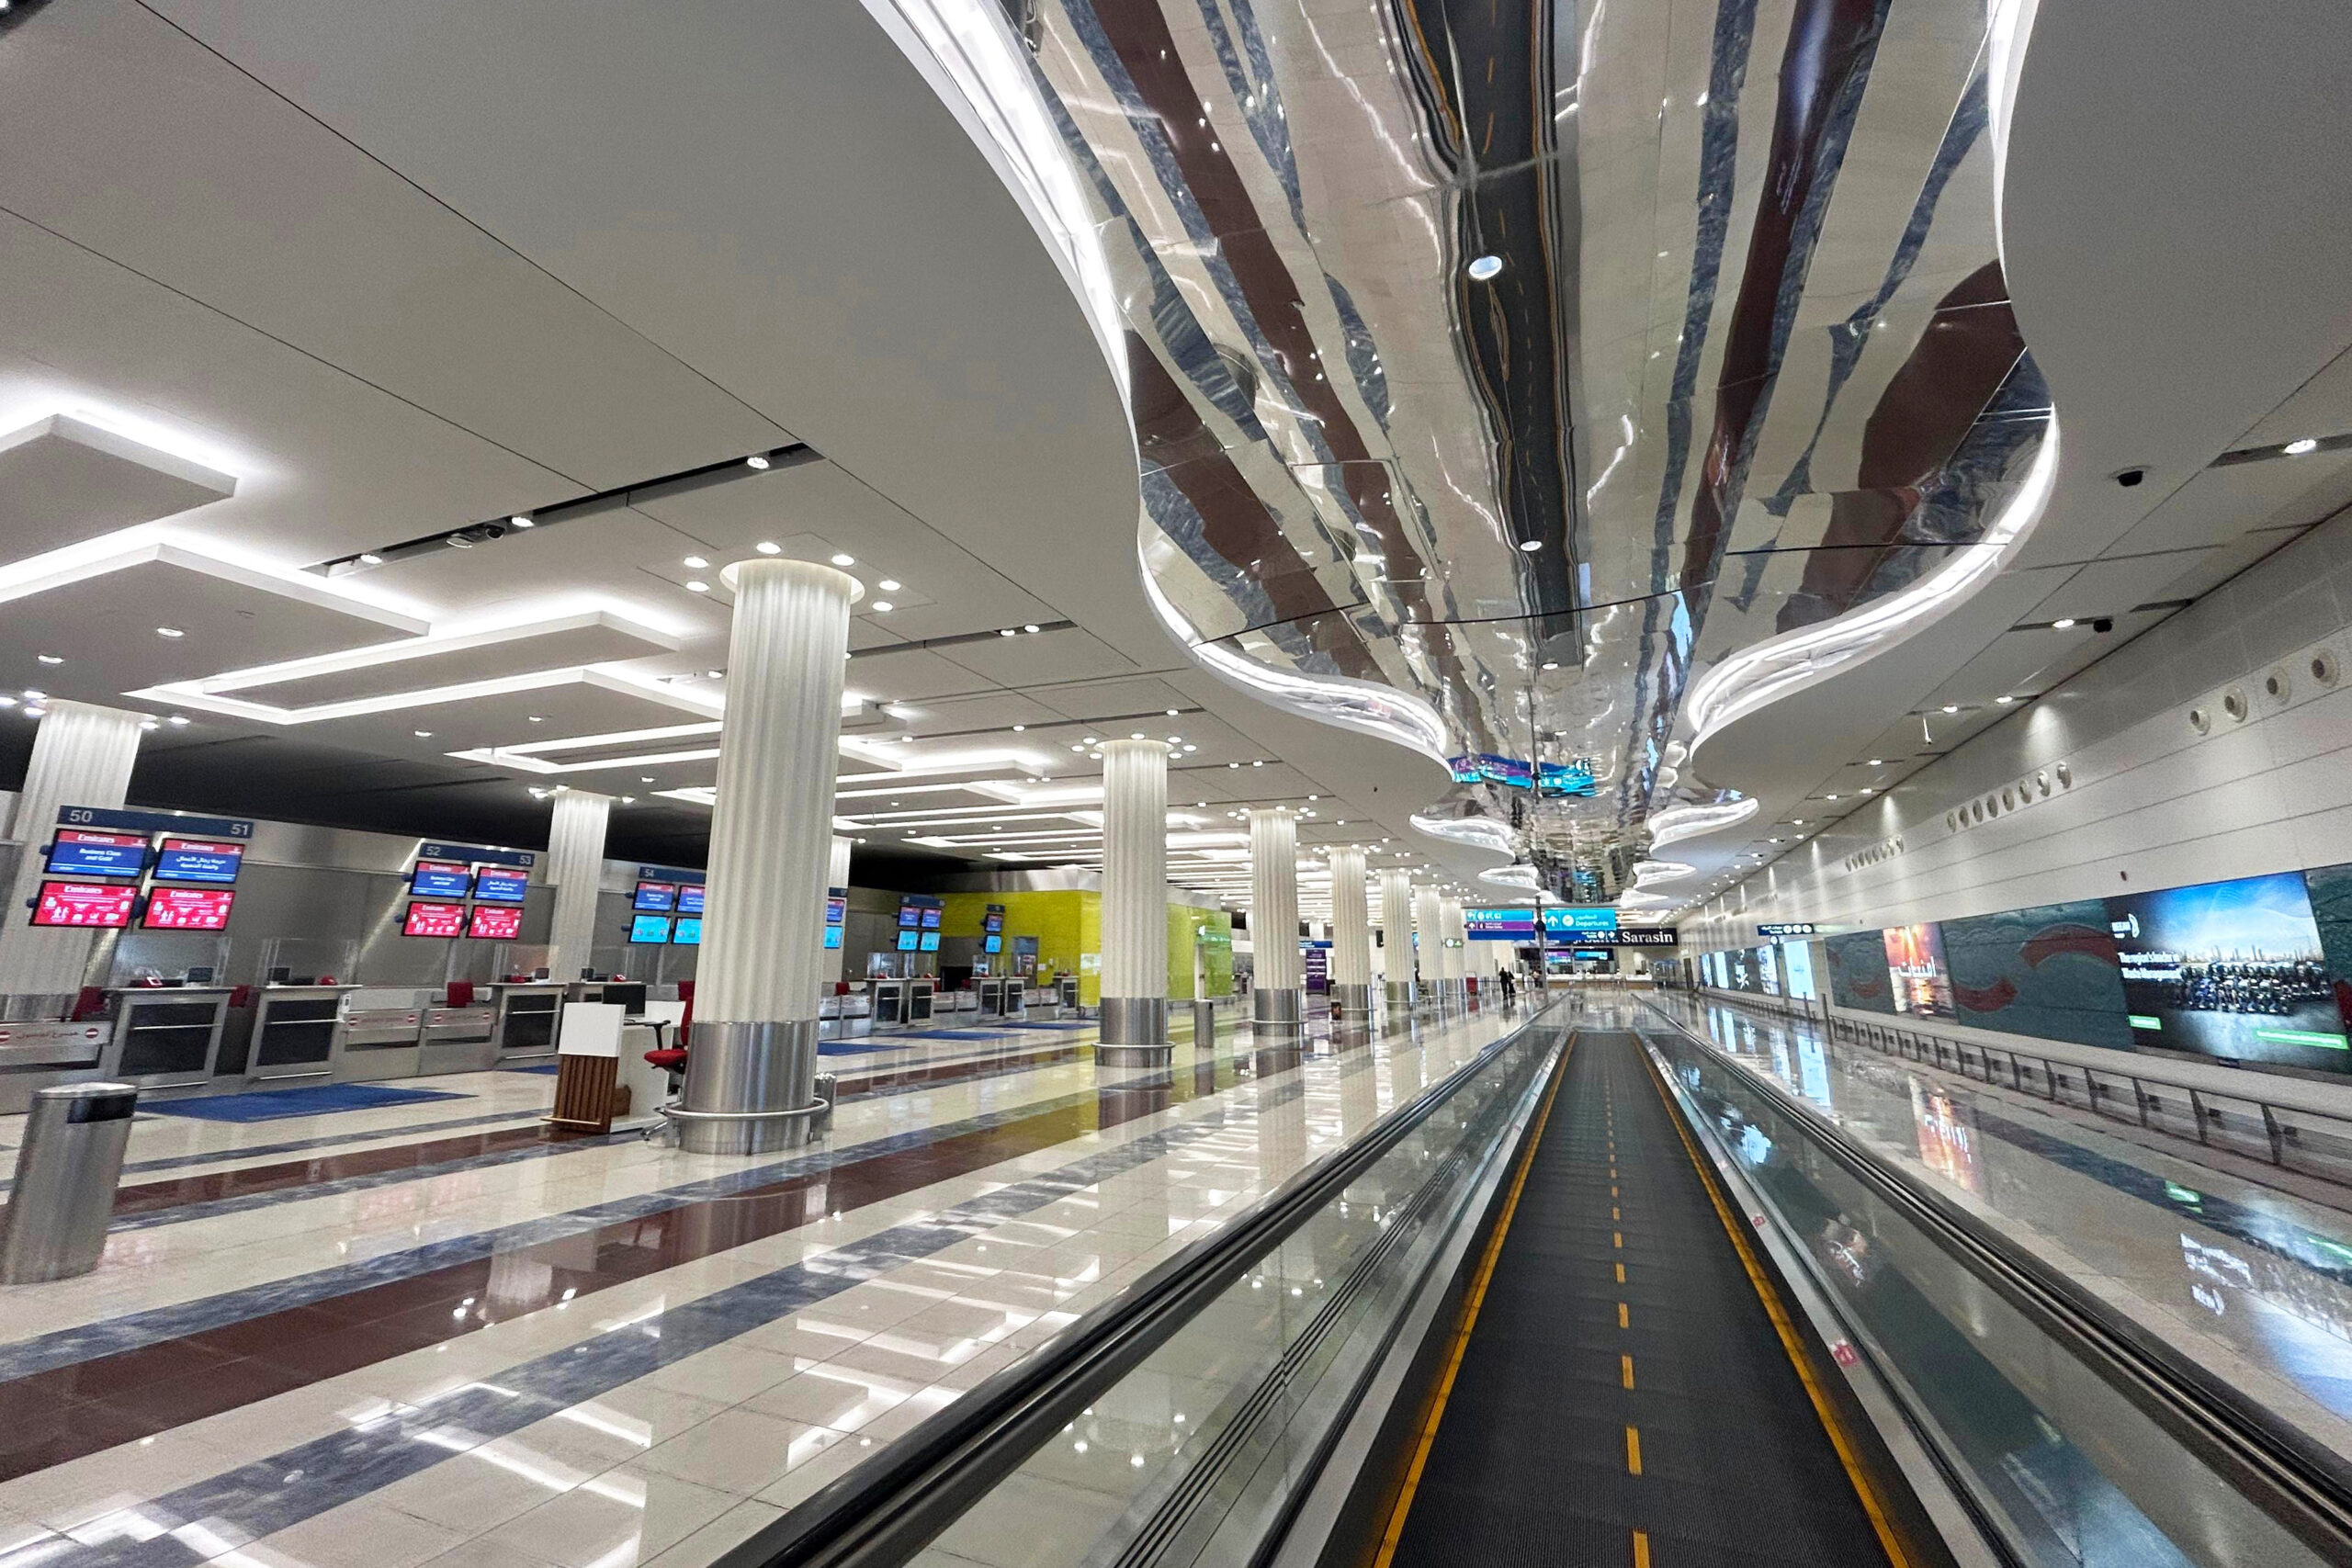 Emirates VIP Terminal for business class passengers at Dubai Airport